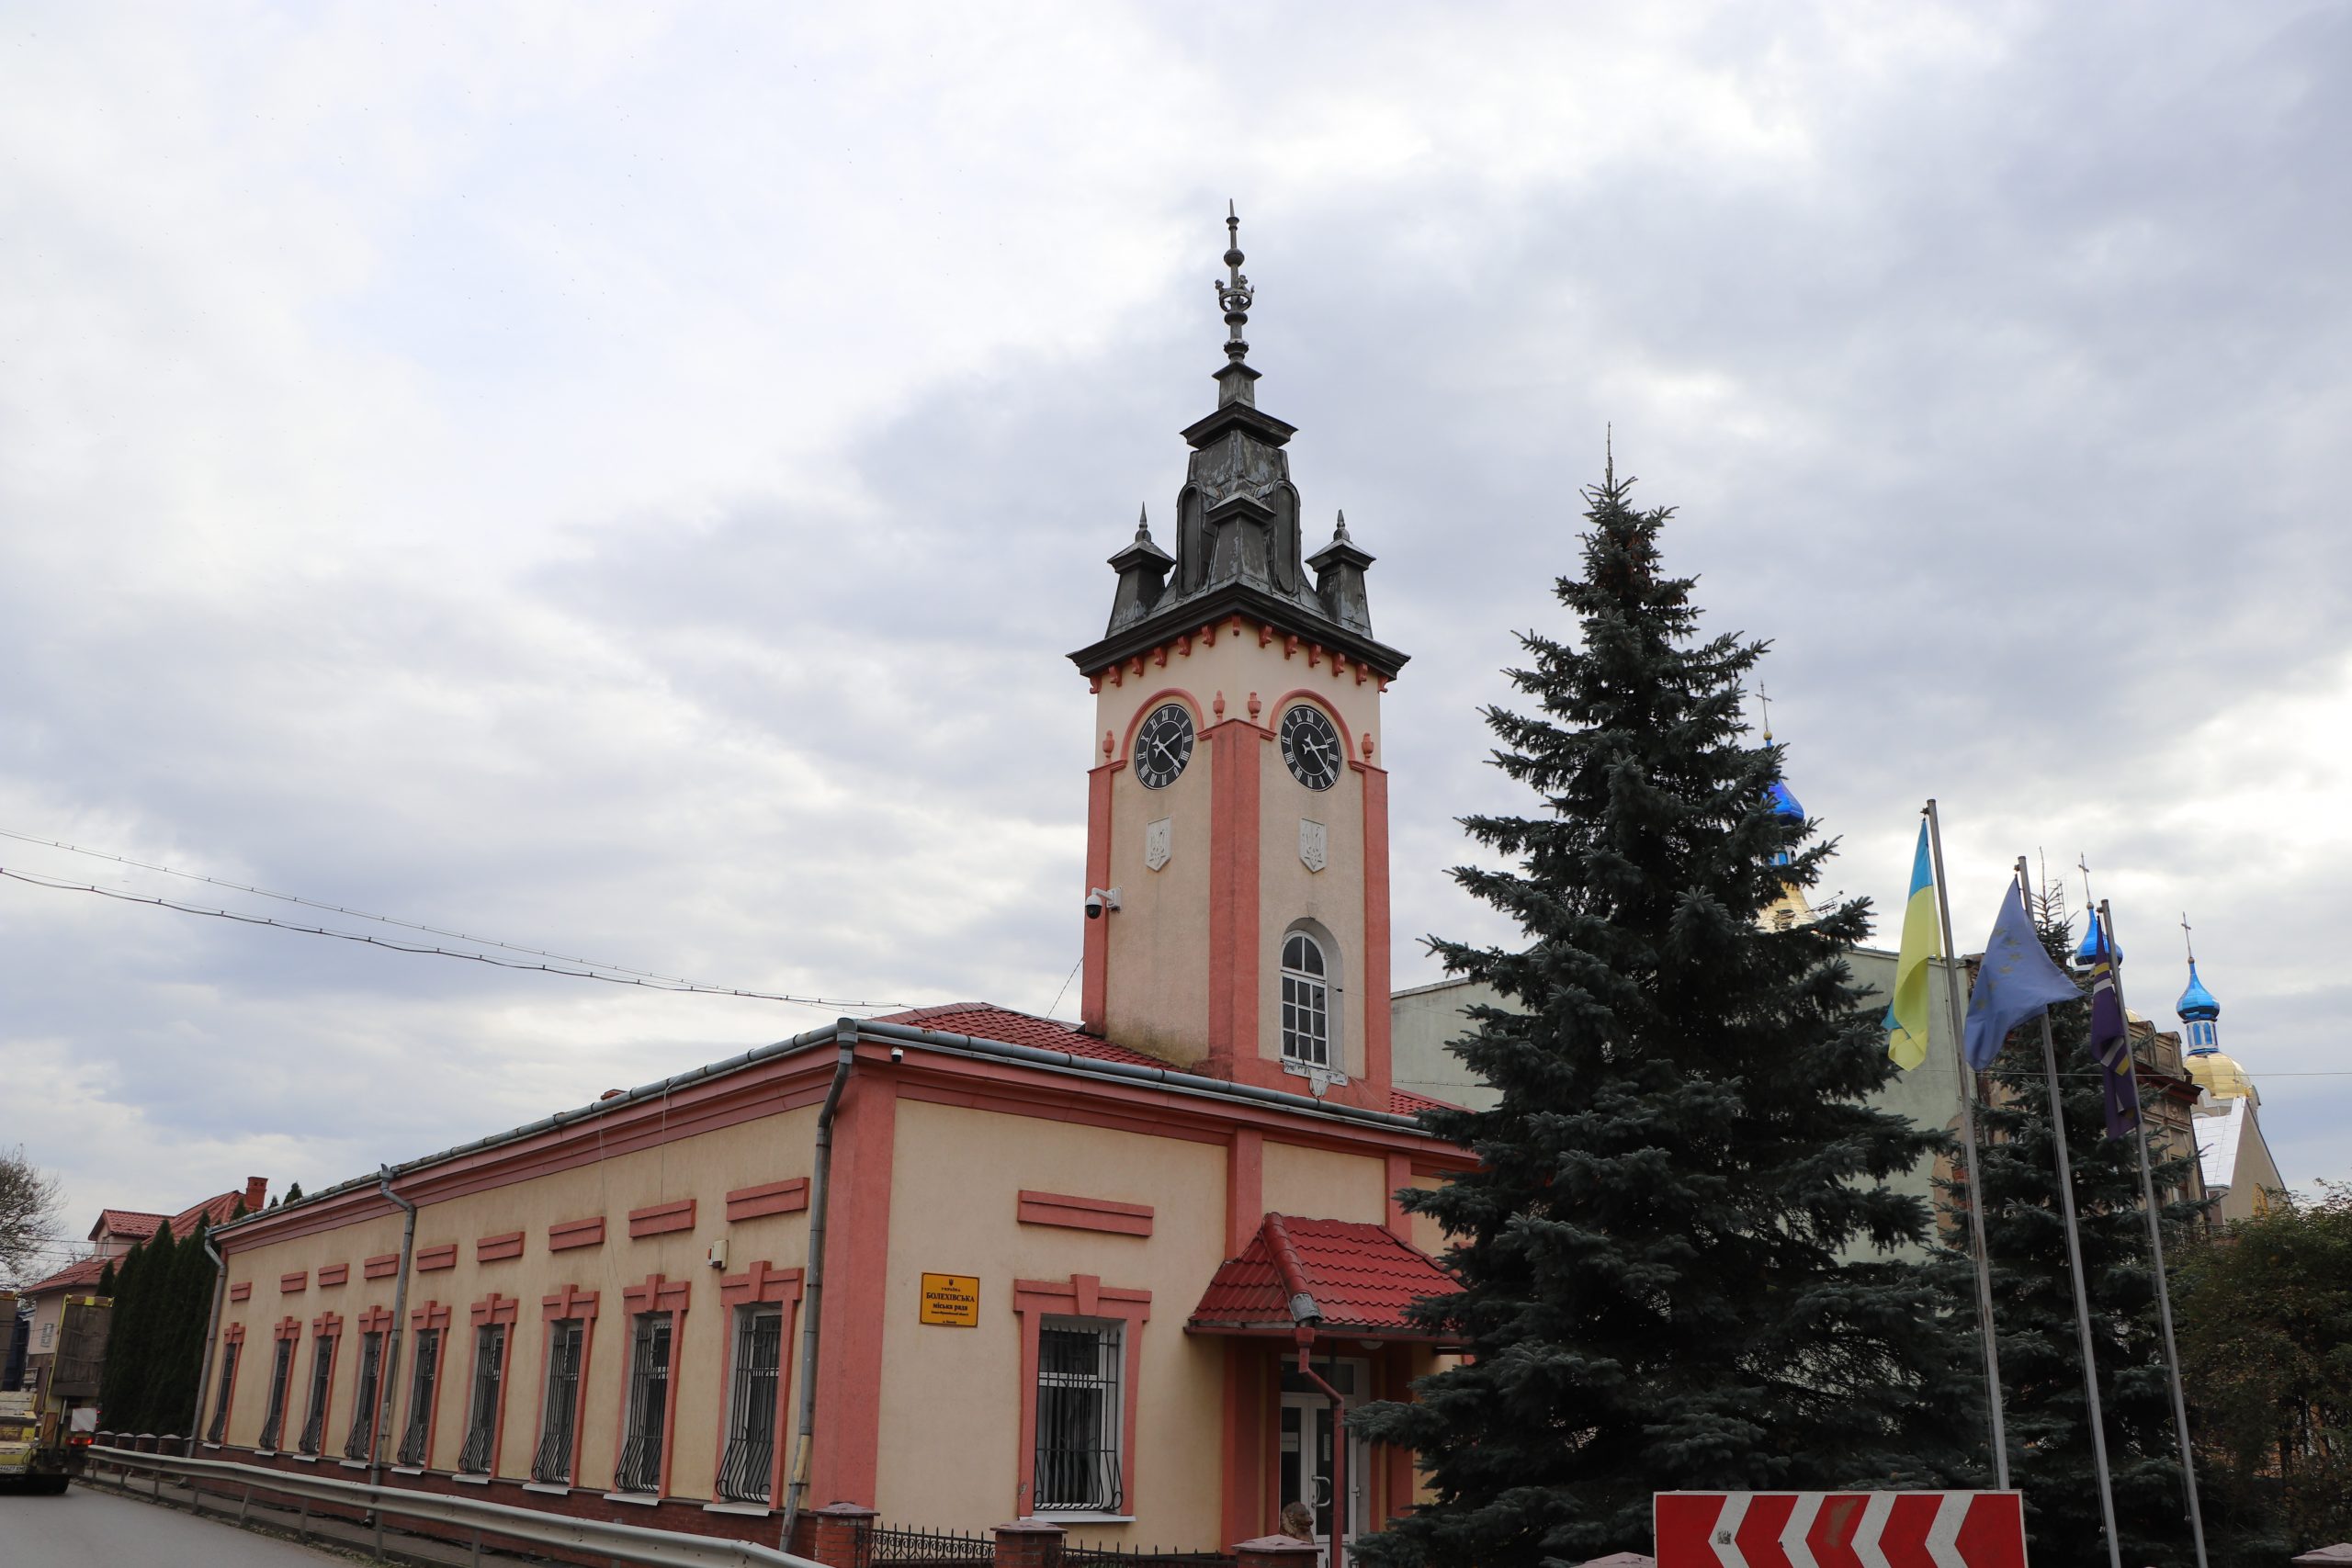 Bolekhiv Town Hall